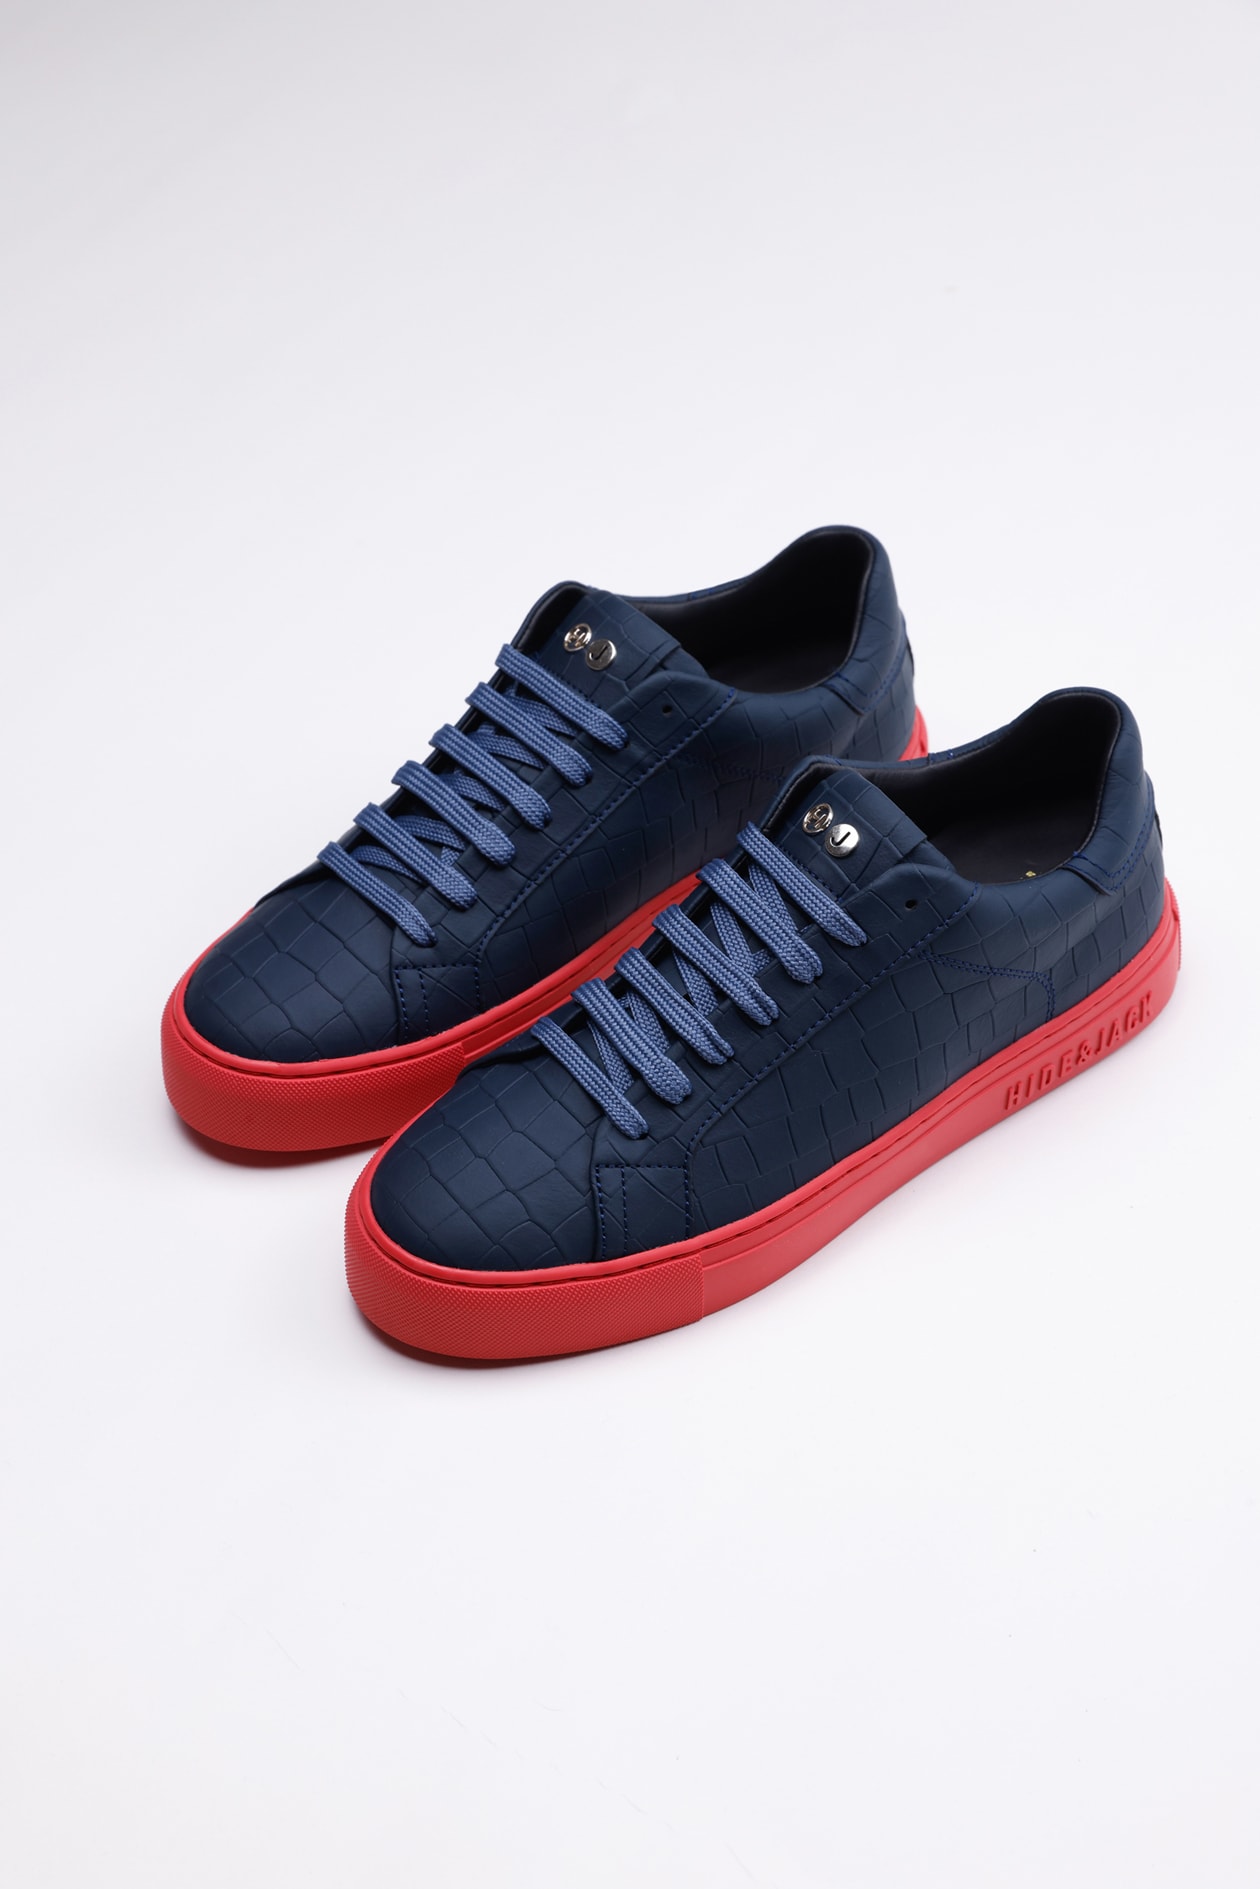 Hide & Jack Low Top Sneaker - Essence Blue Red